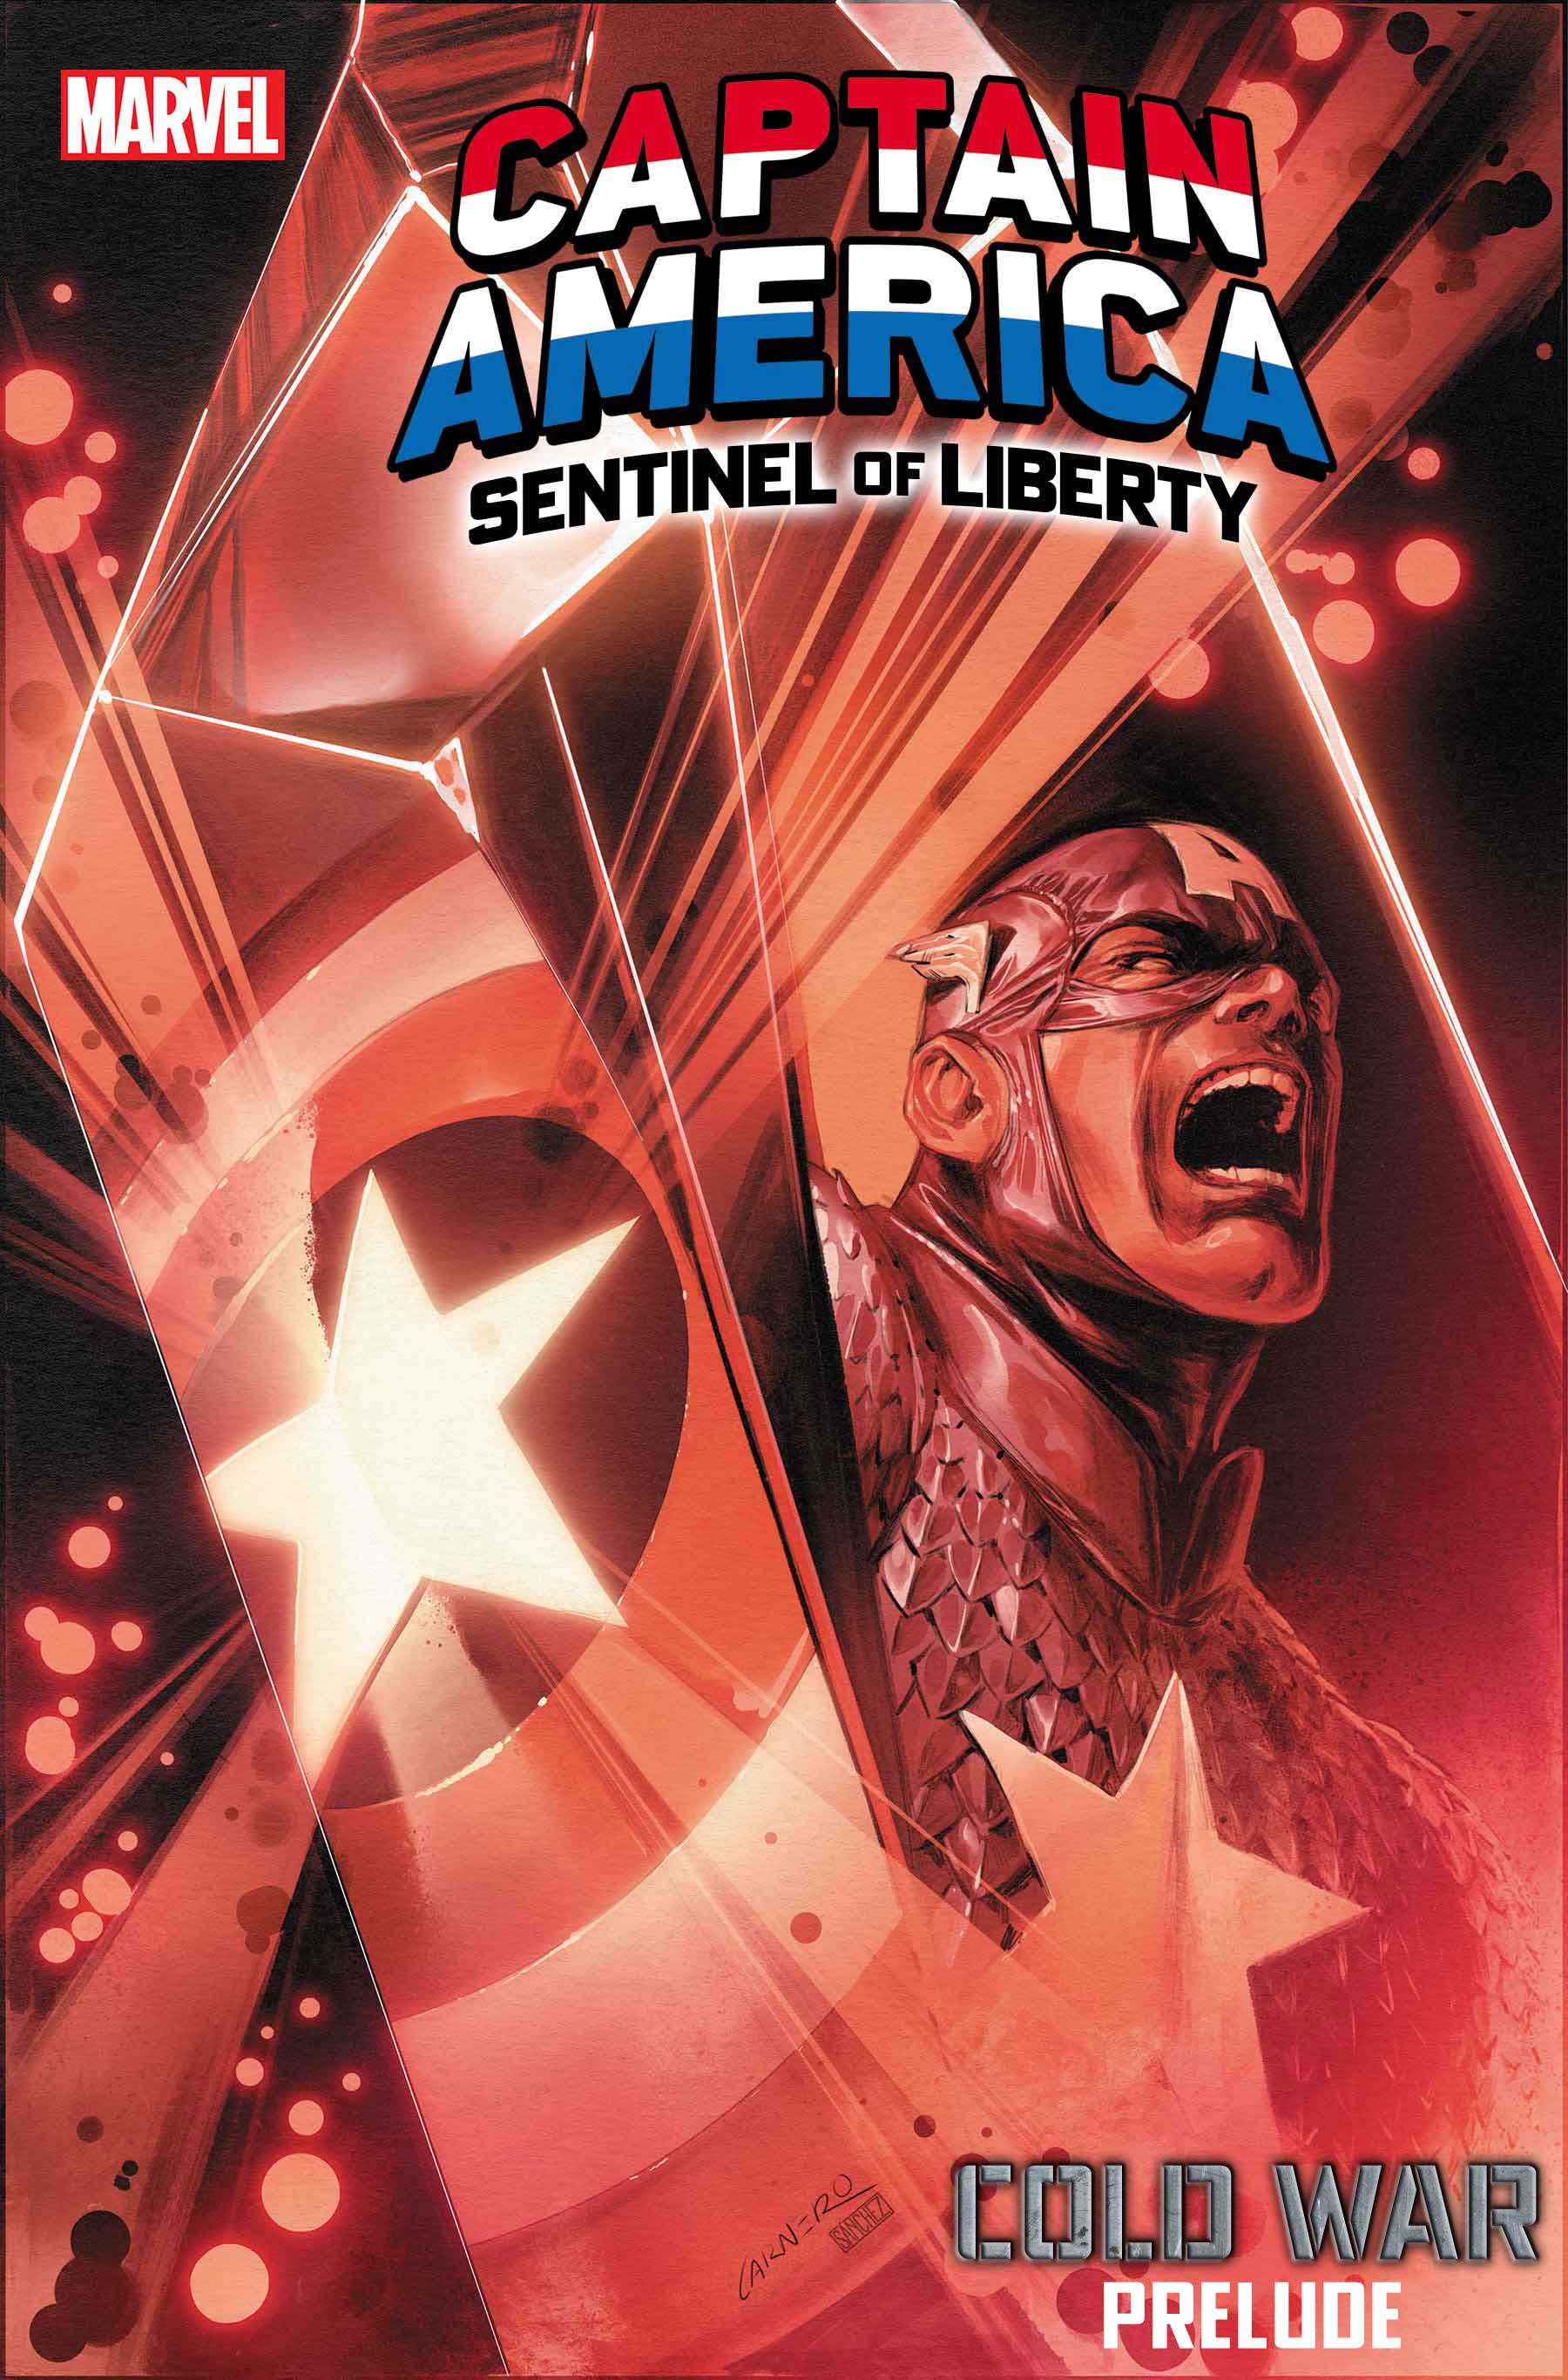 Captain America: Sentinel of Liberty #11 Cold War prelude cover